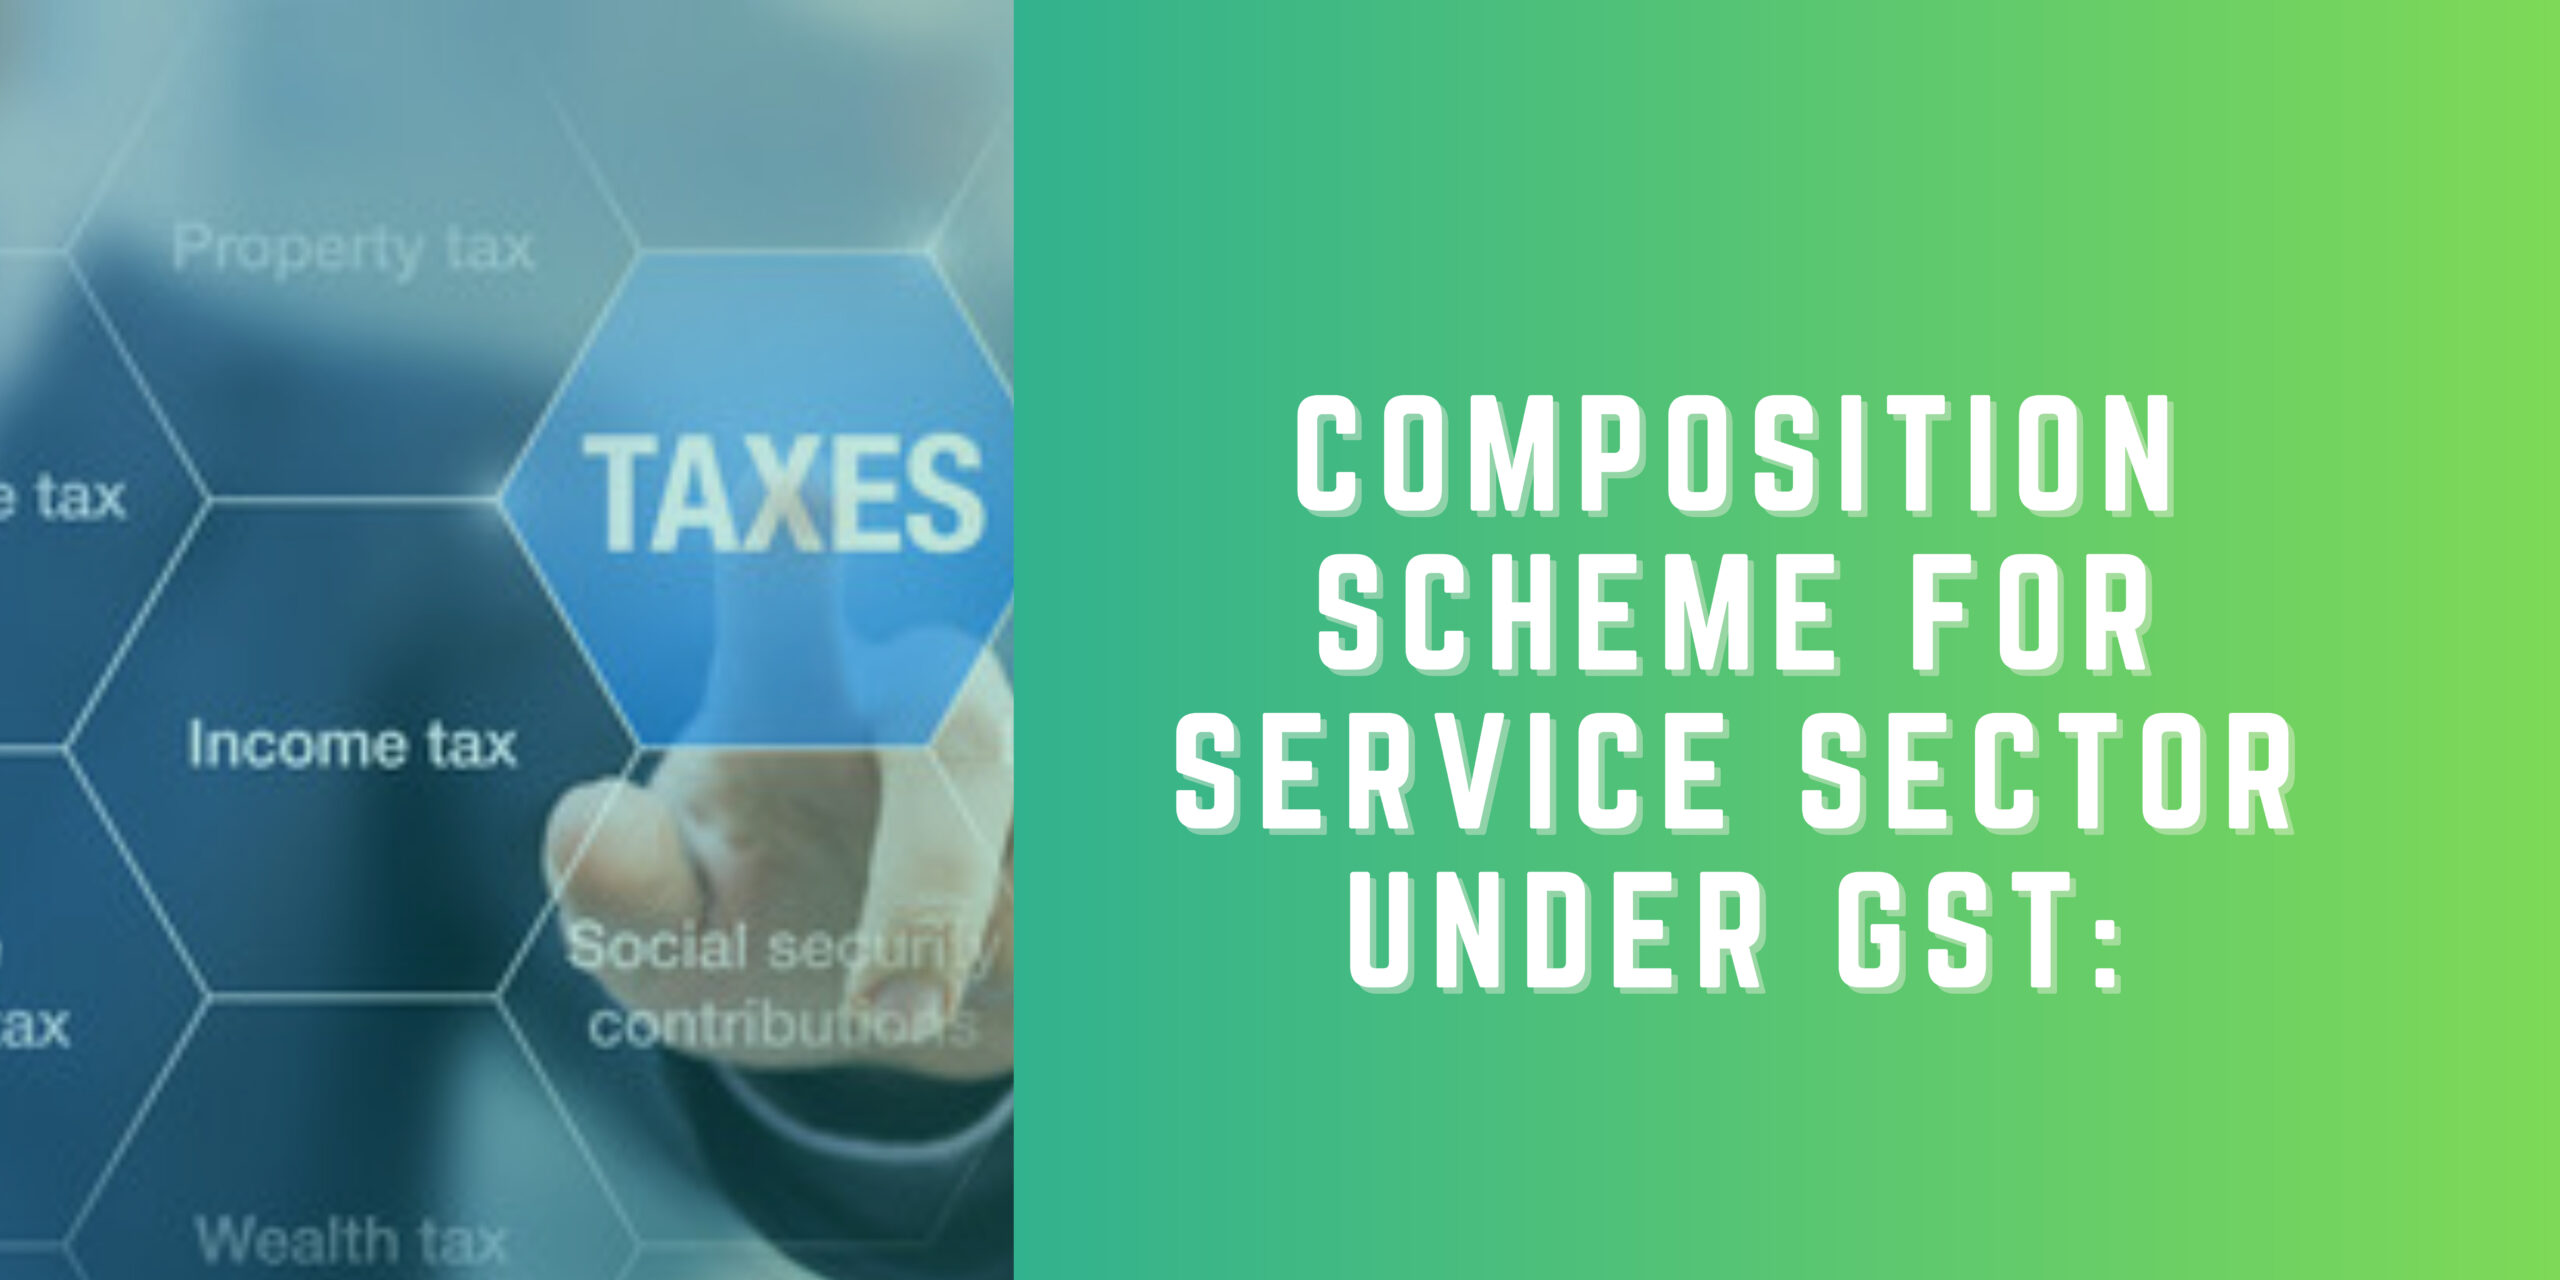 Composition scheme for service sector under GST